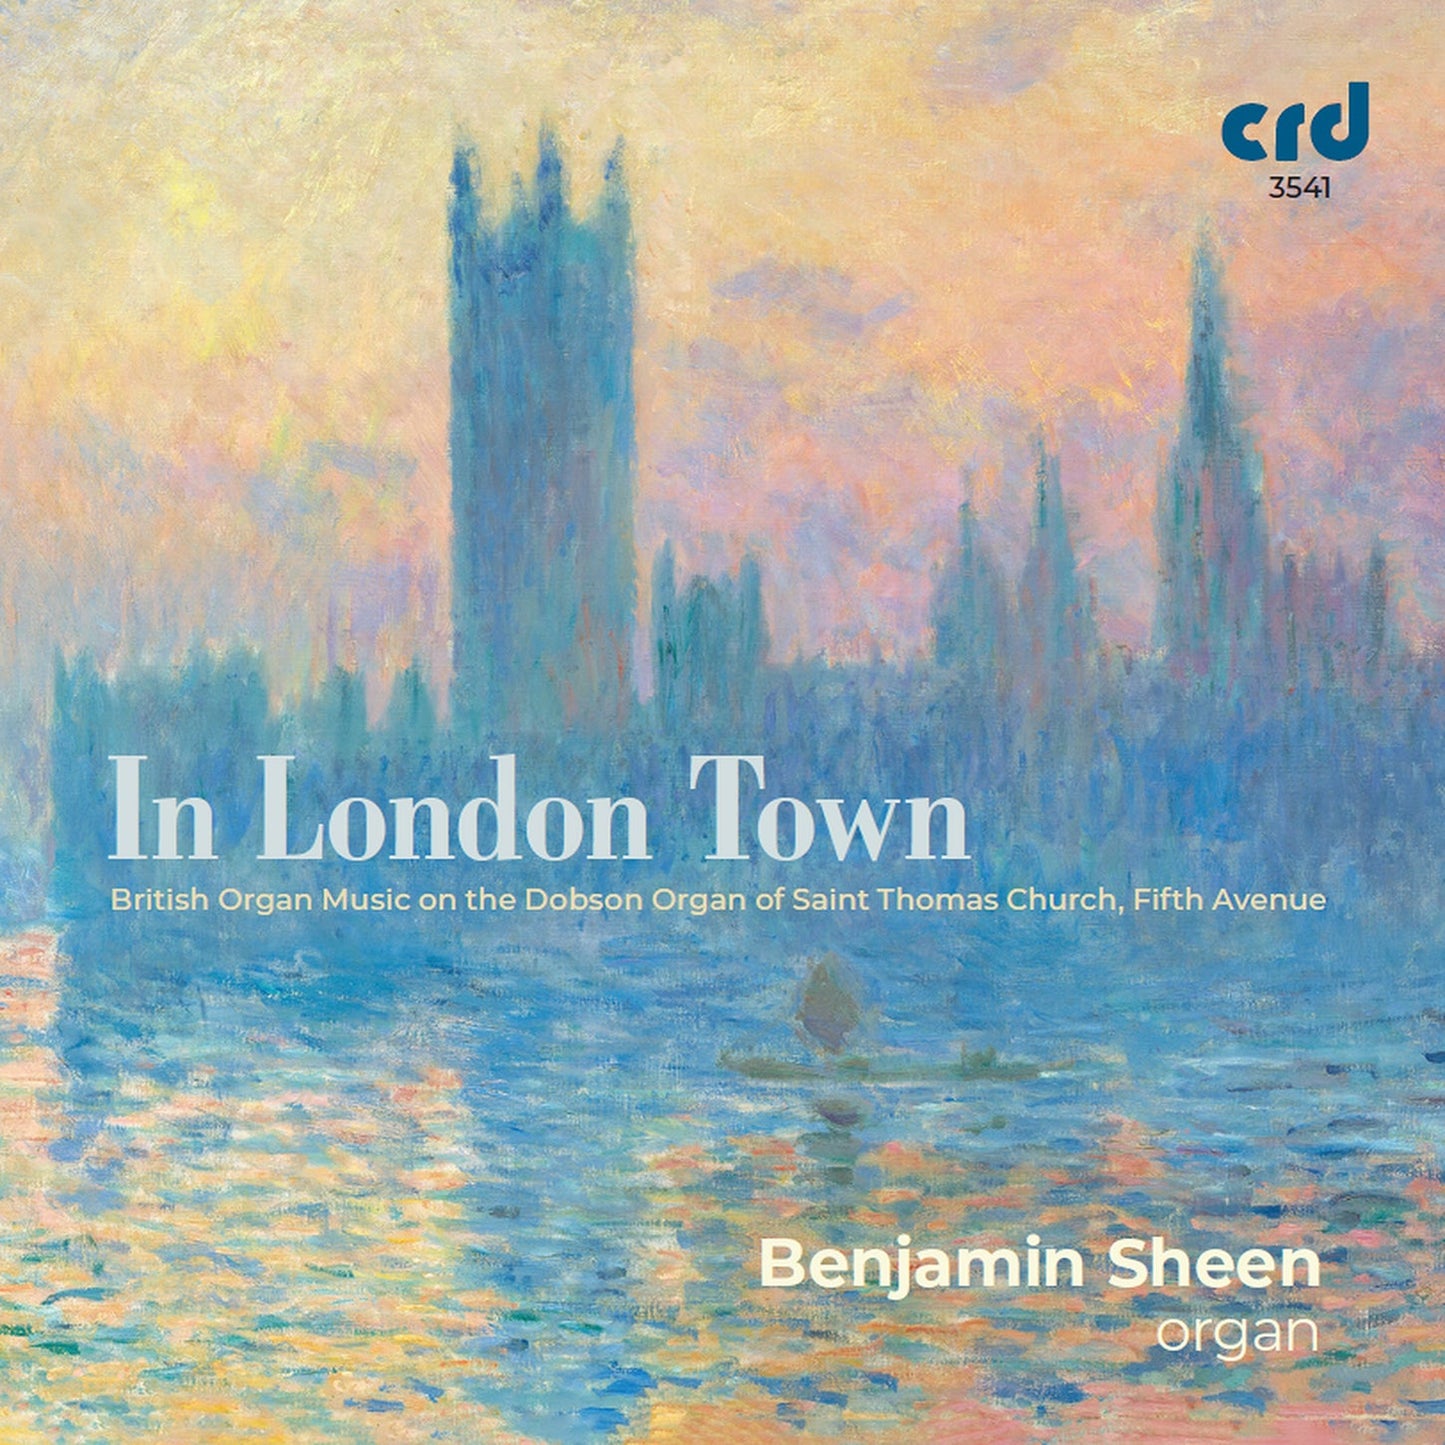 In London Town - British Organ Music On The Dobson Organ Of